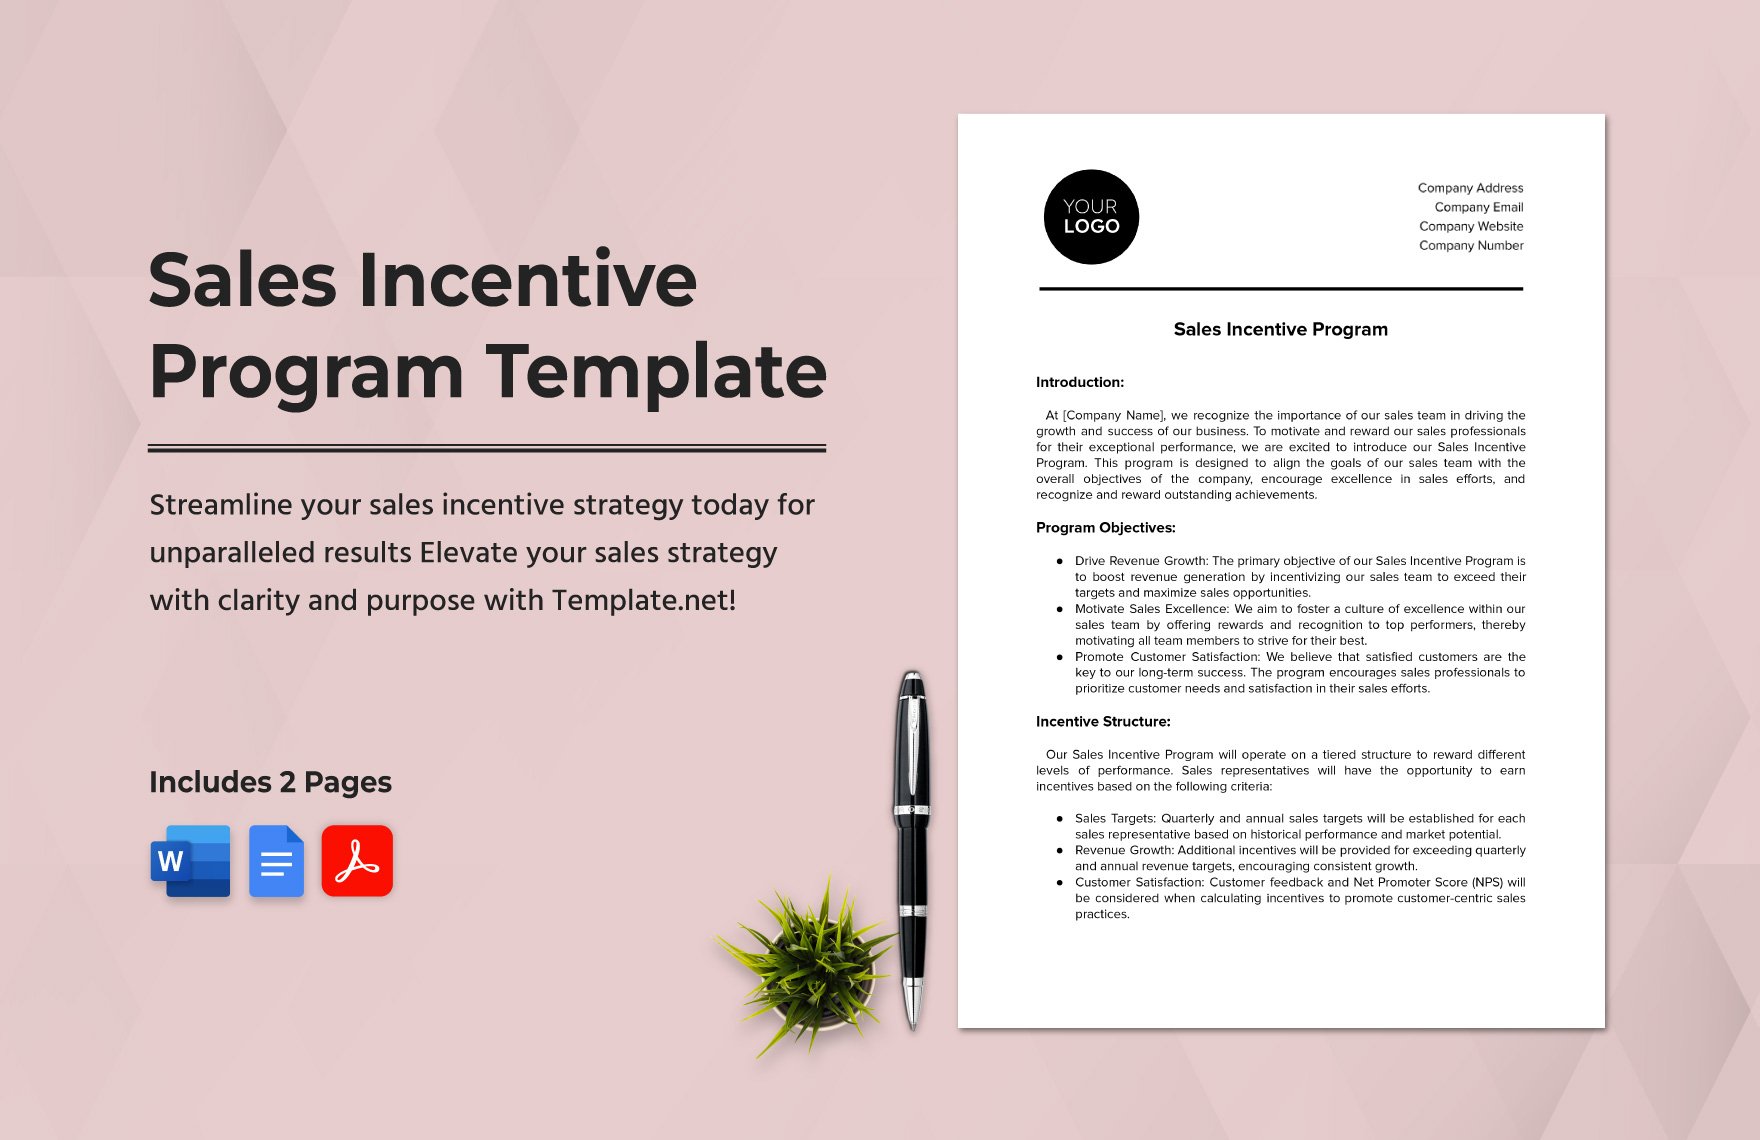 Sales Incentive Program Template in Word, Google Docs, PDF